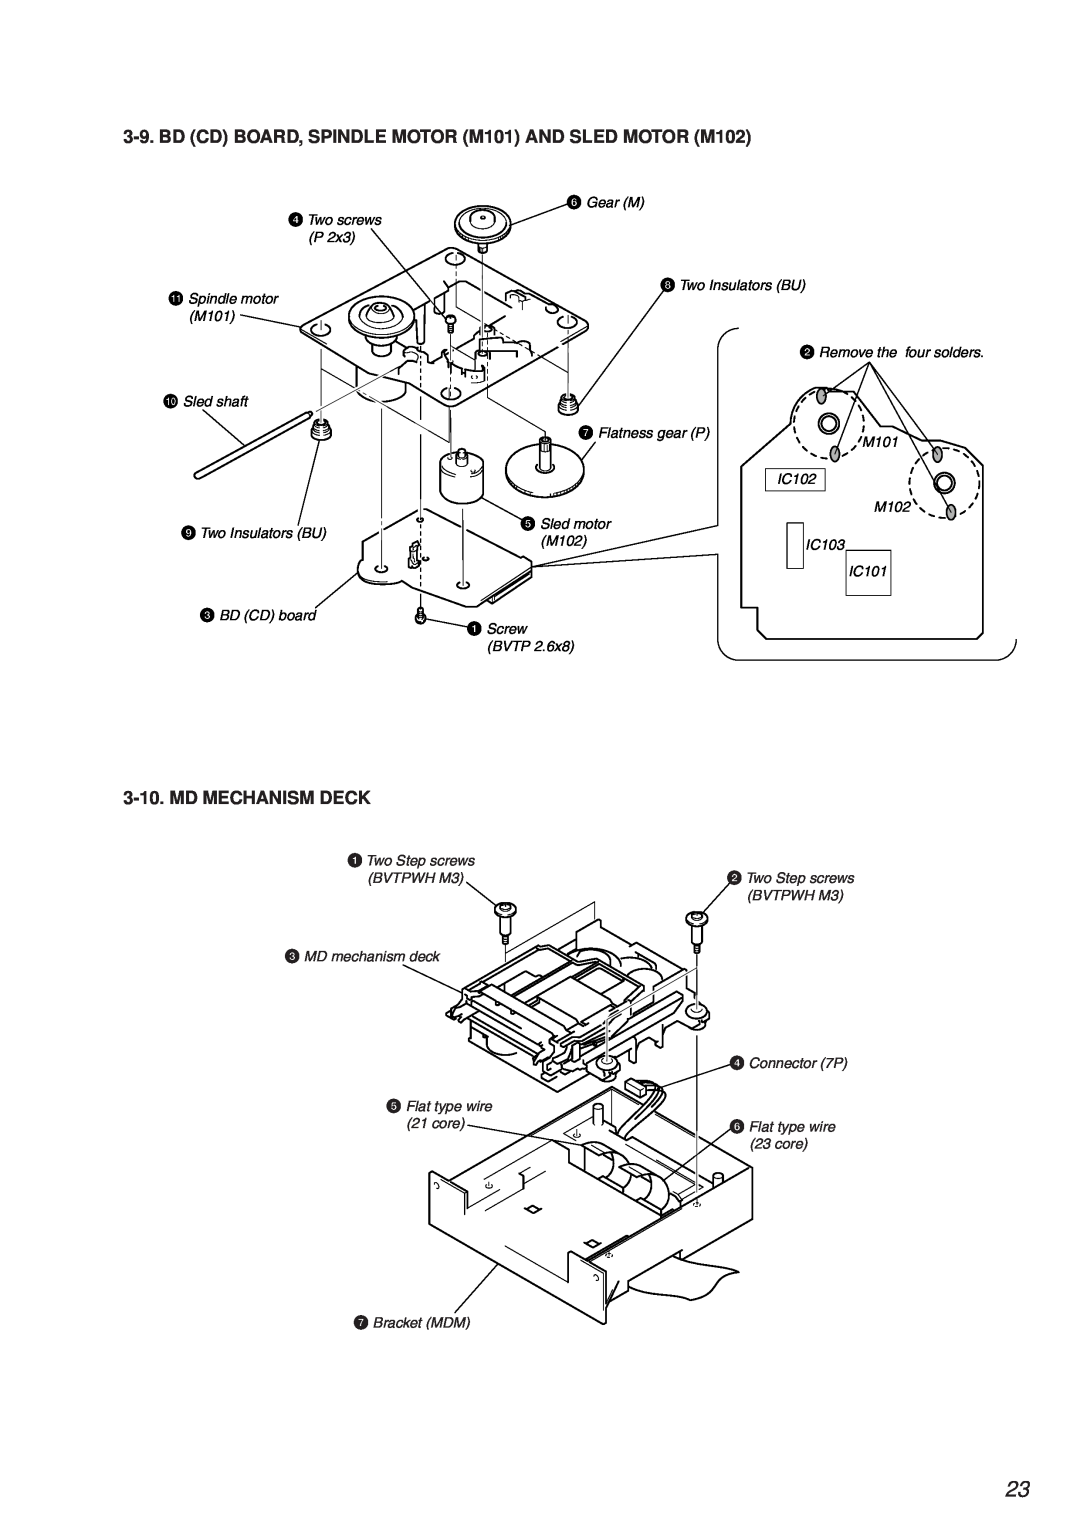 Sony HCD-MD373 service manual Md Mechanism Deck 